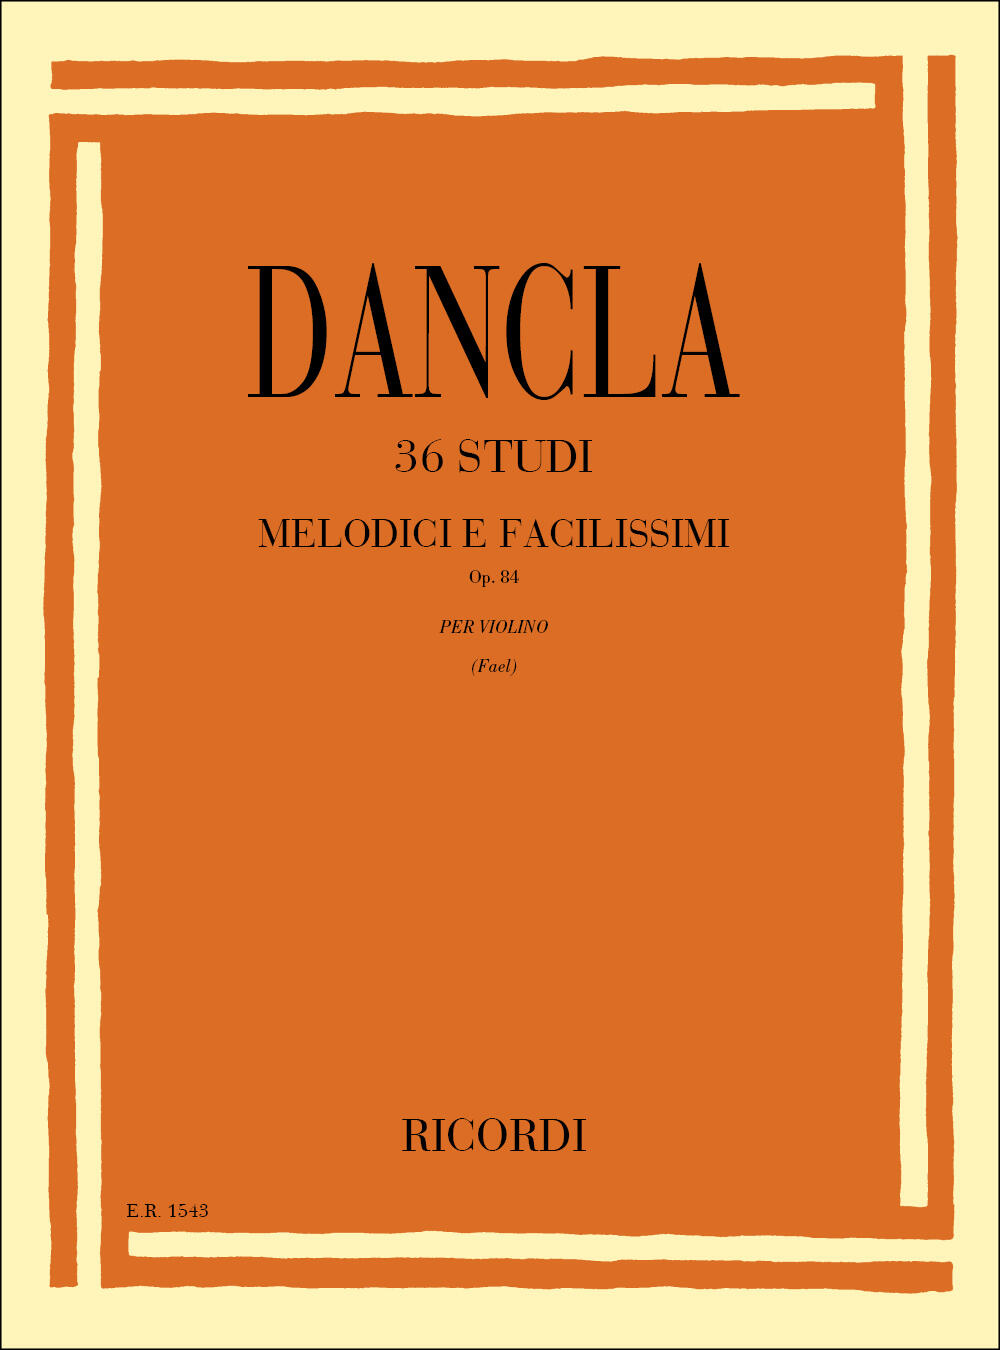 36 Etudes Mélodiques op.84 pour violon 36 Studi melodici e facilissimi Op. 84 per Violino Charles Dancla Violin : photo 1